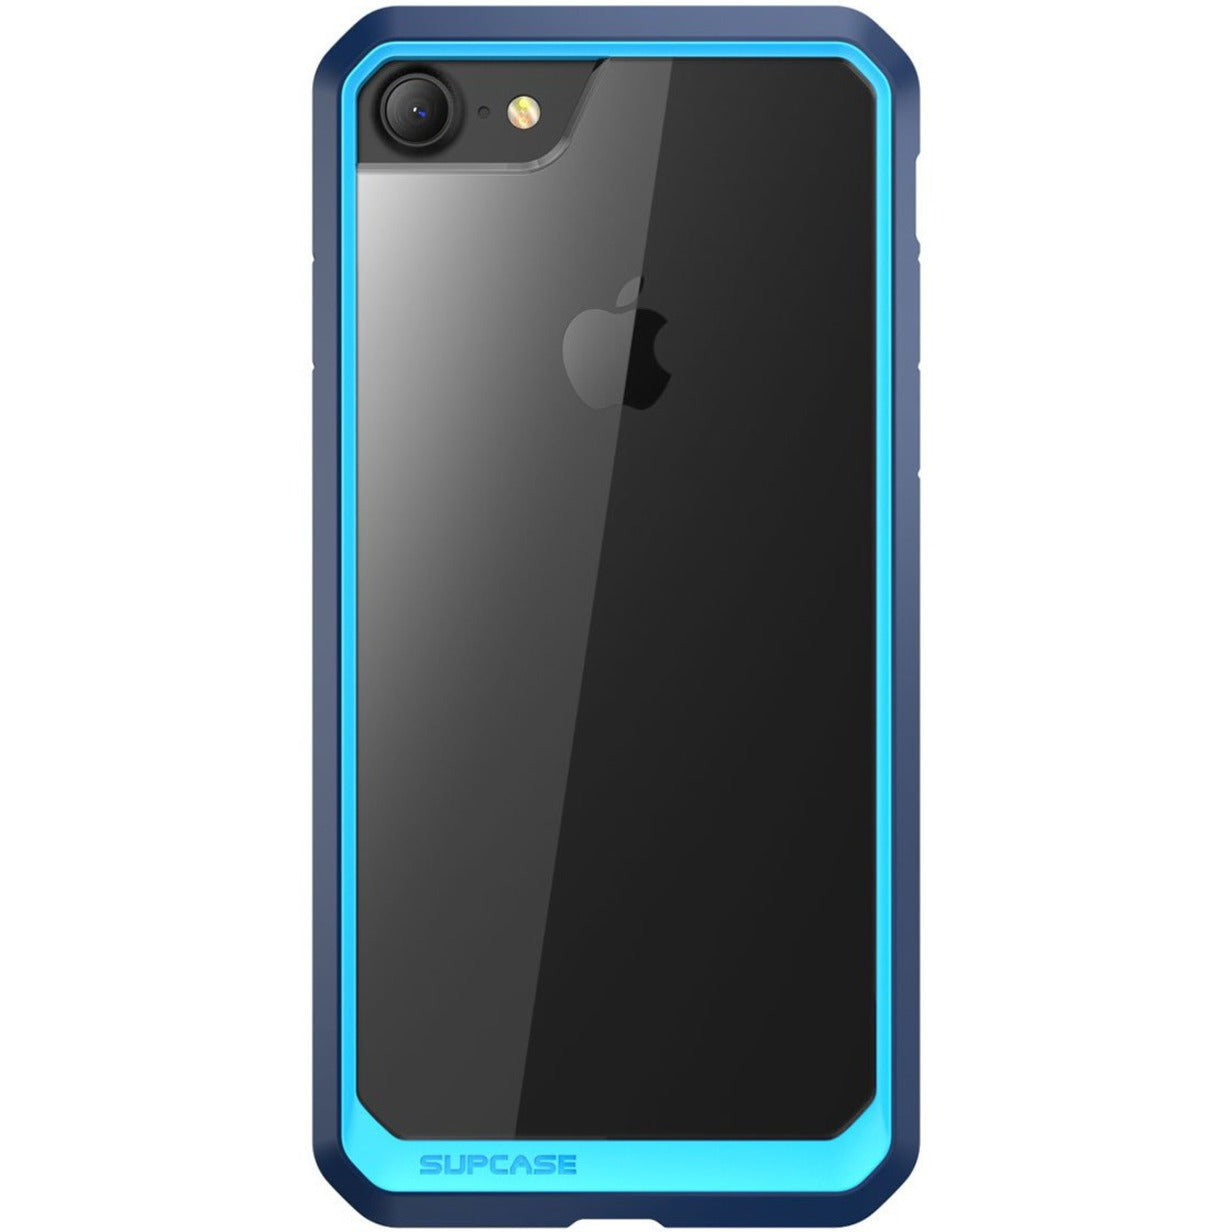 i-Blason Unicorn Beetle Style Carrying Case (Holster) Apple iPhone 8 Smartphone - Blue